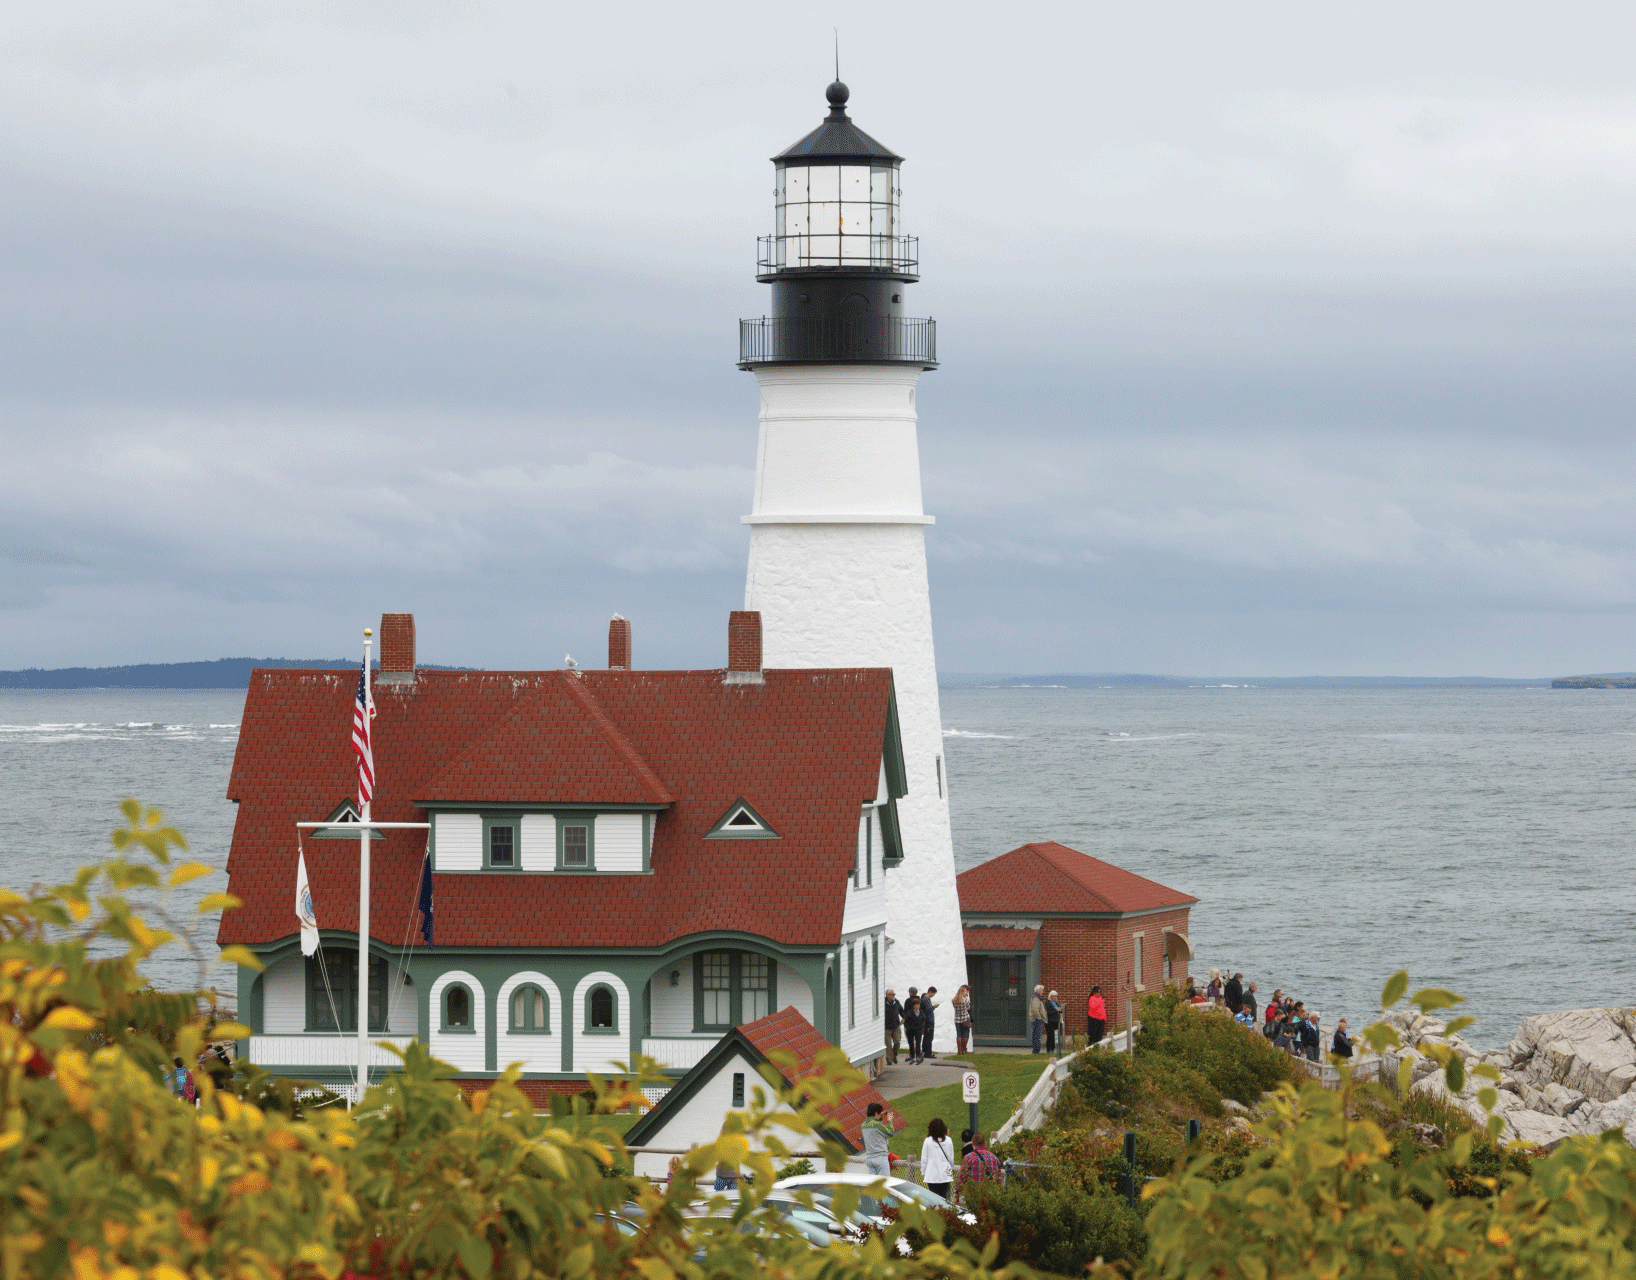 Photograph showing a lighthouse on a Maine coast.